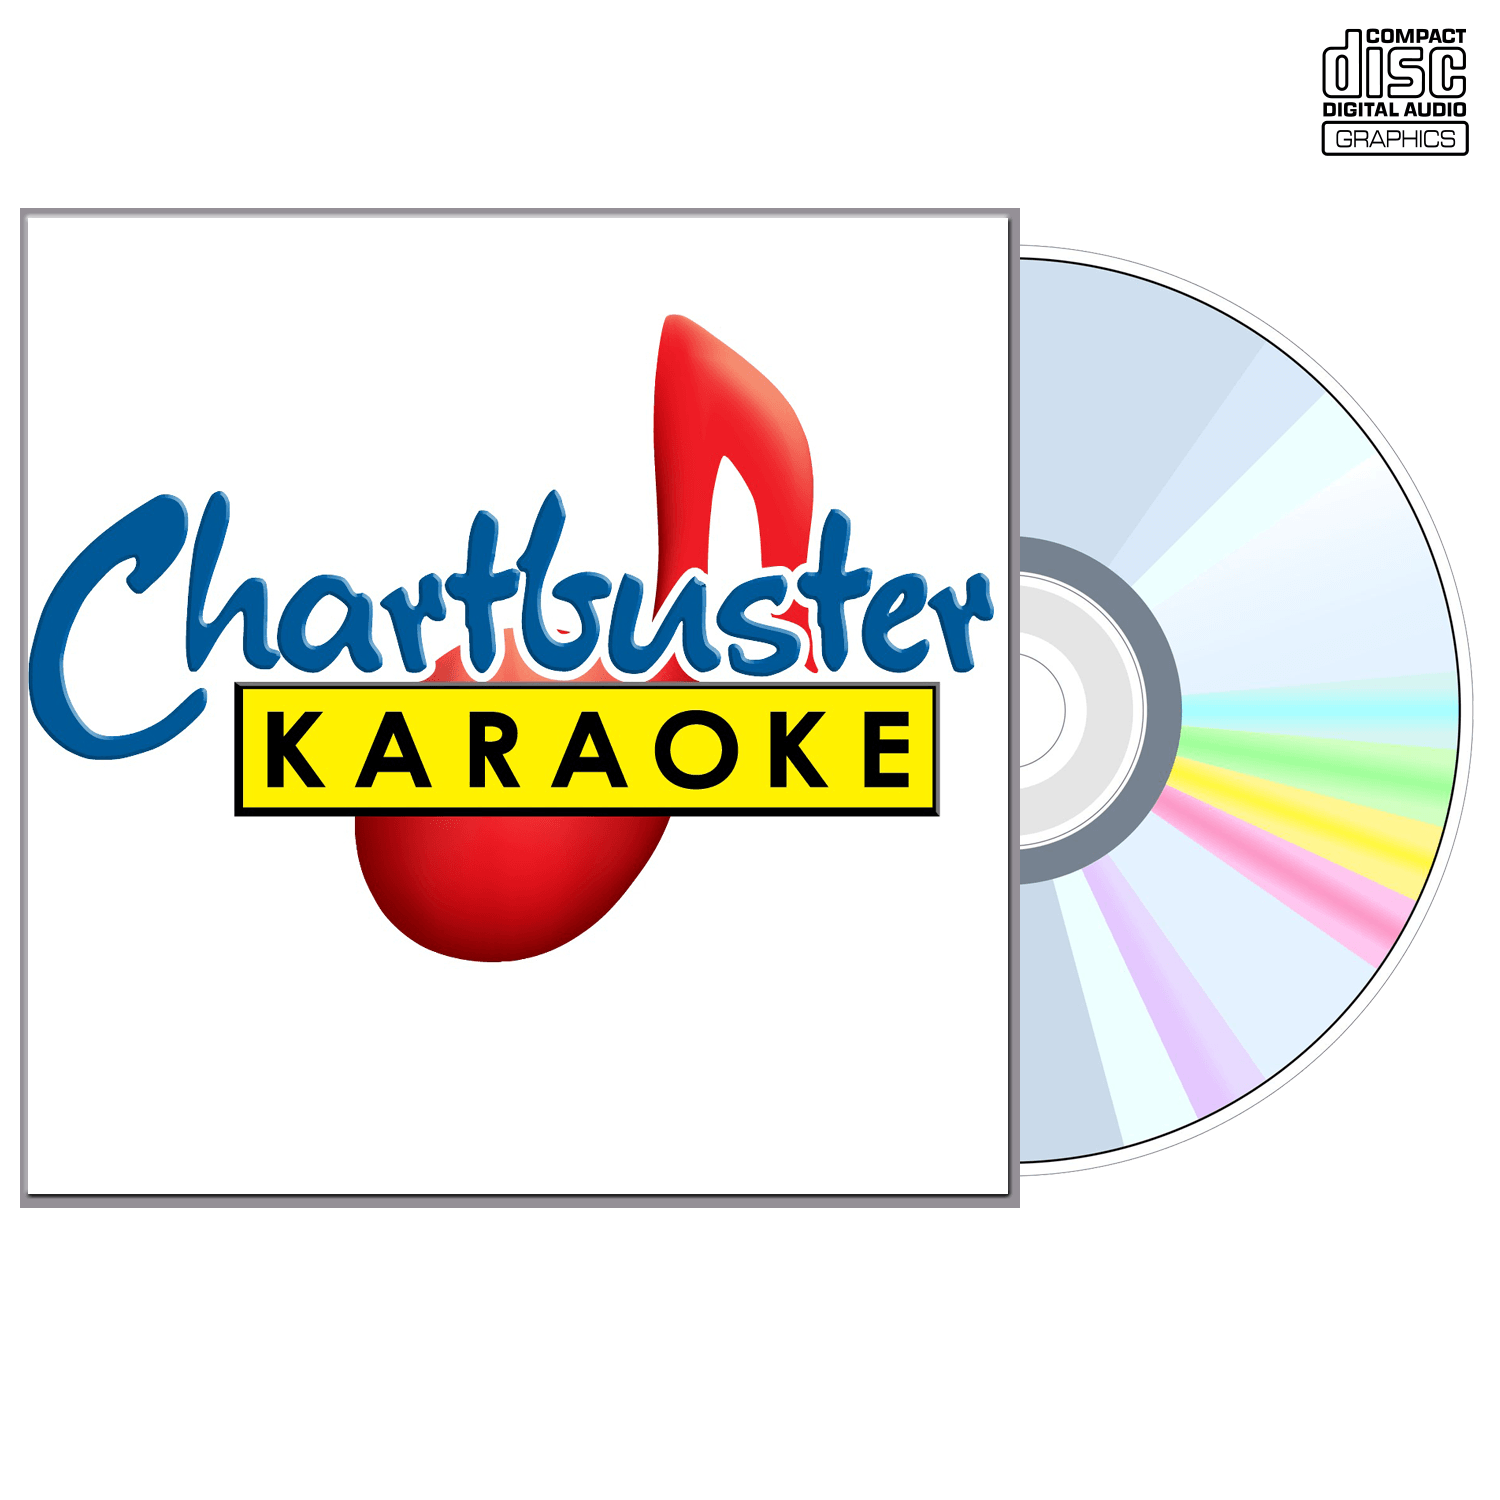 Celine Dion Vol 1 - CD+G - Chartbuster Karaoke - Karaoke Home Entertainment